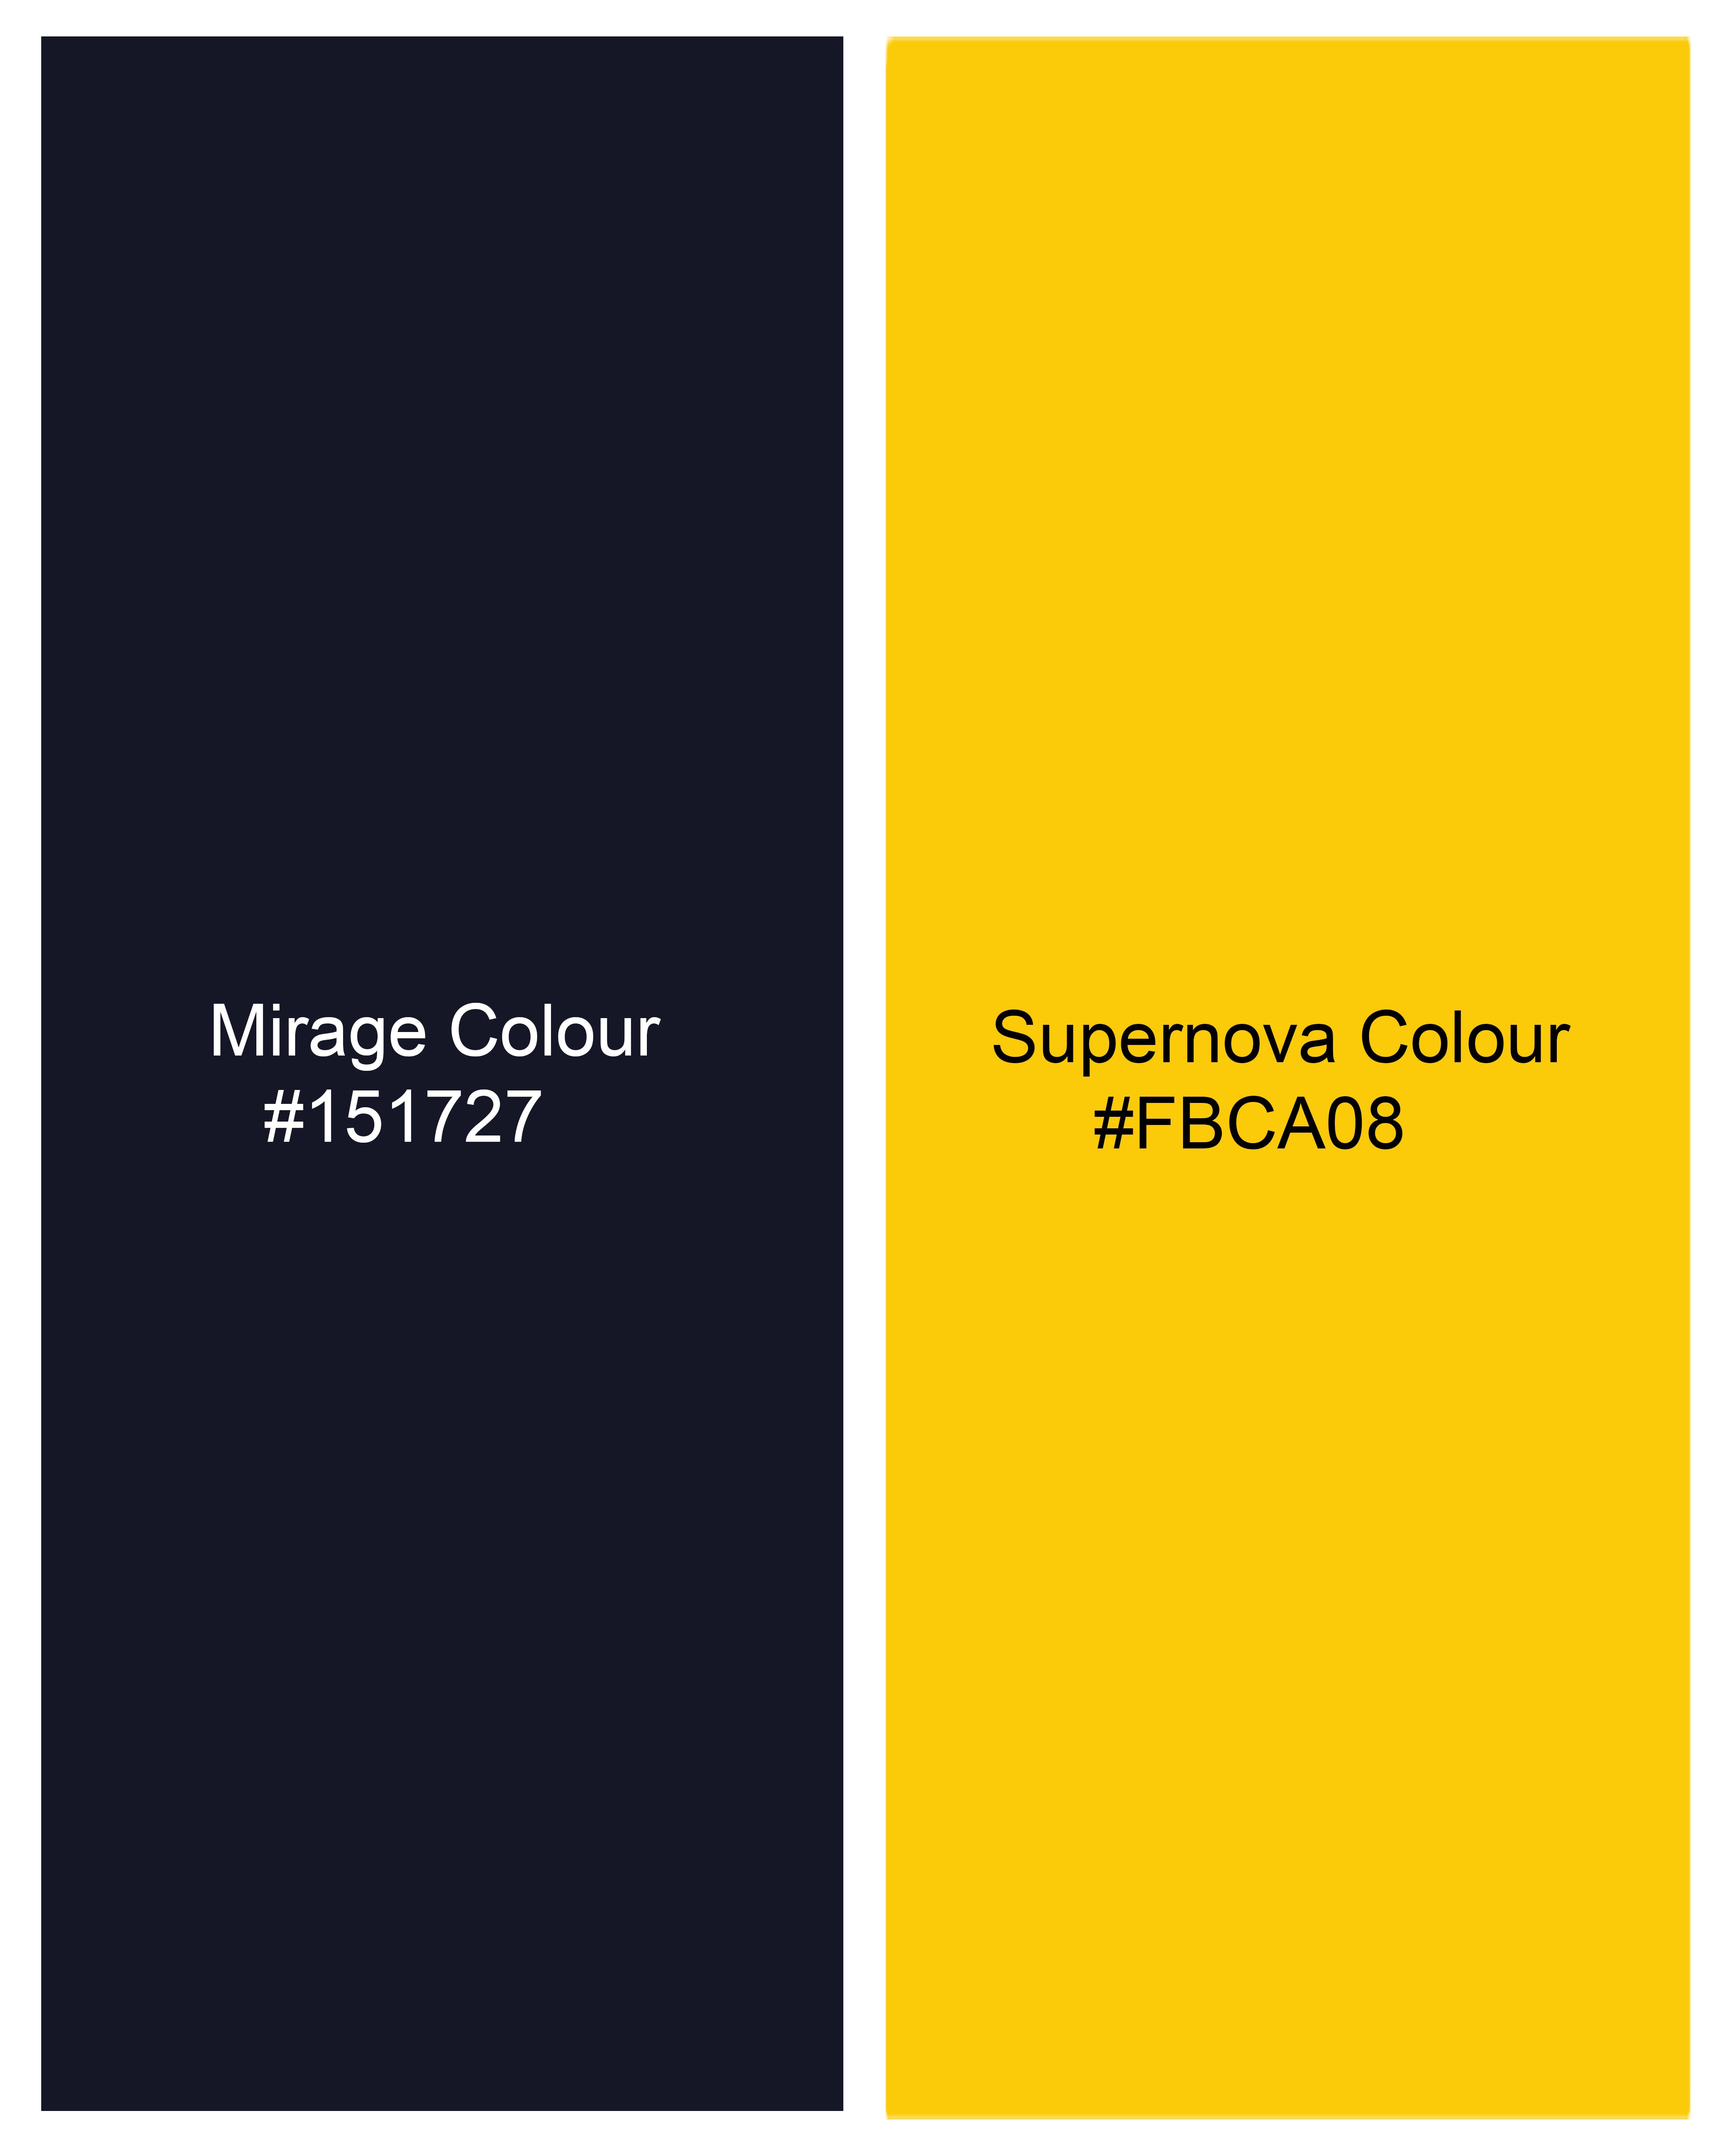 Mirage Navy Blue and Supernova Yellow Super Soft Organic Cotton Pique Polo with Zipper Closure TS637-M, TS637-M, TS637-U, TS637-XL, TS637-XXL, TS637-3XL, TS637-4XL